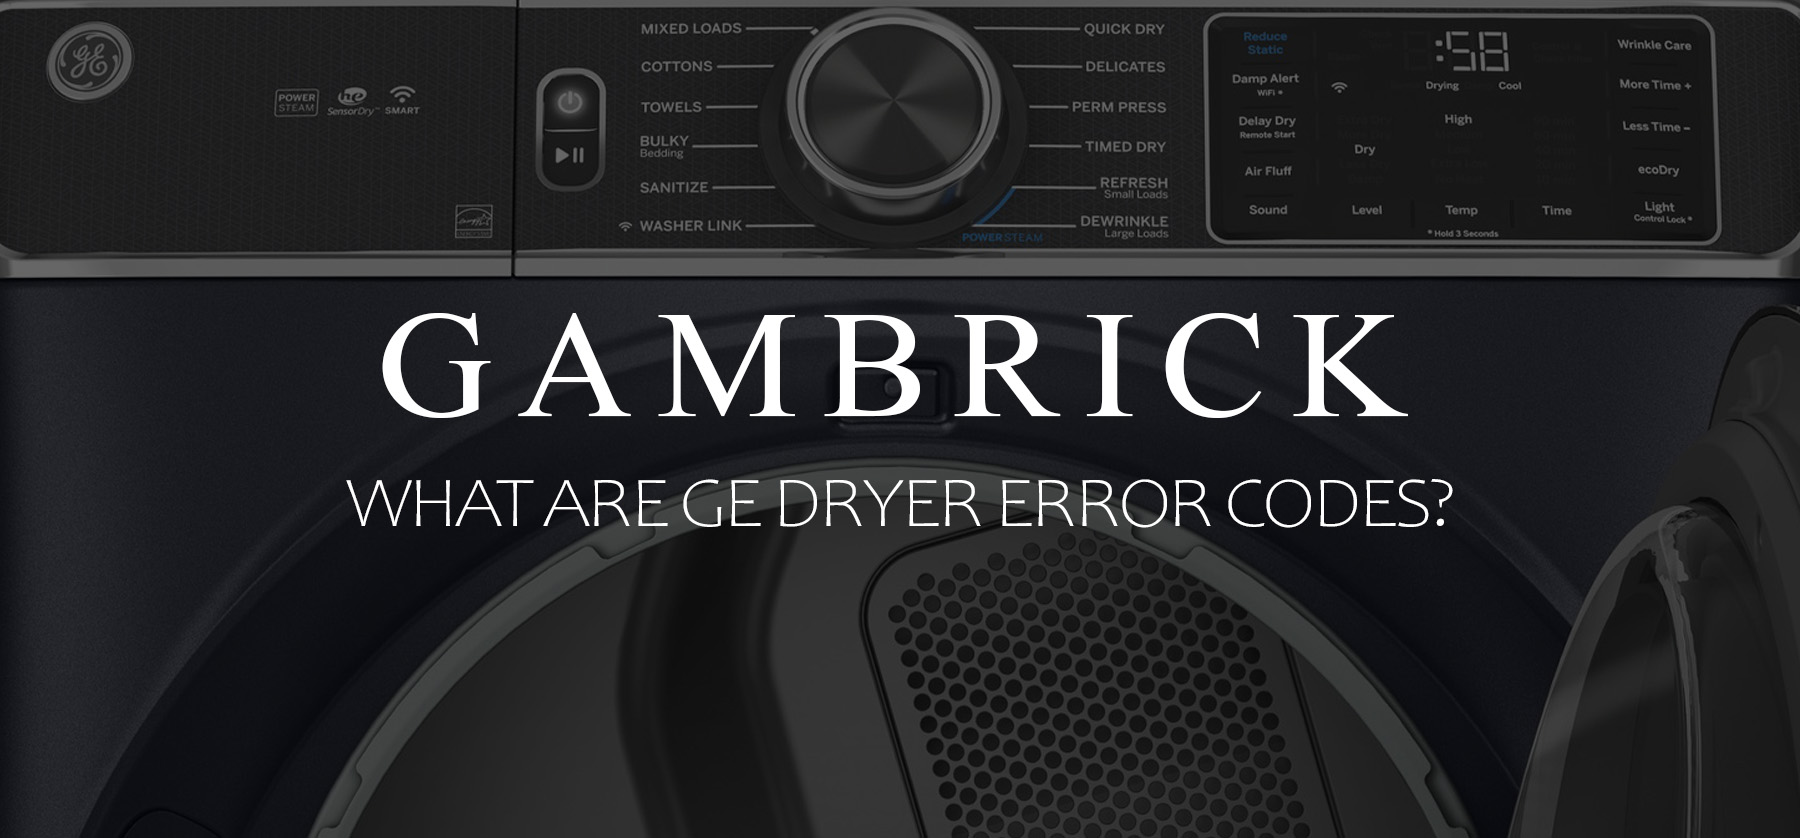 what are GE dryer error codes banner 1.0